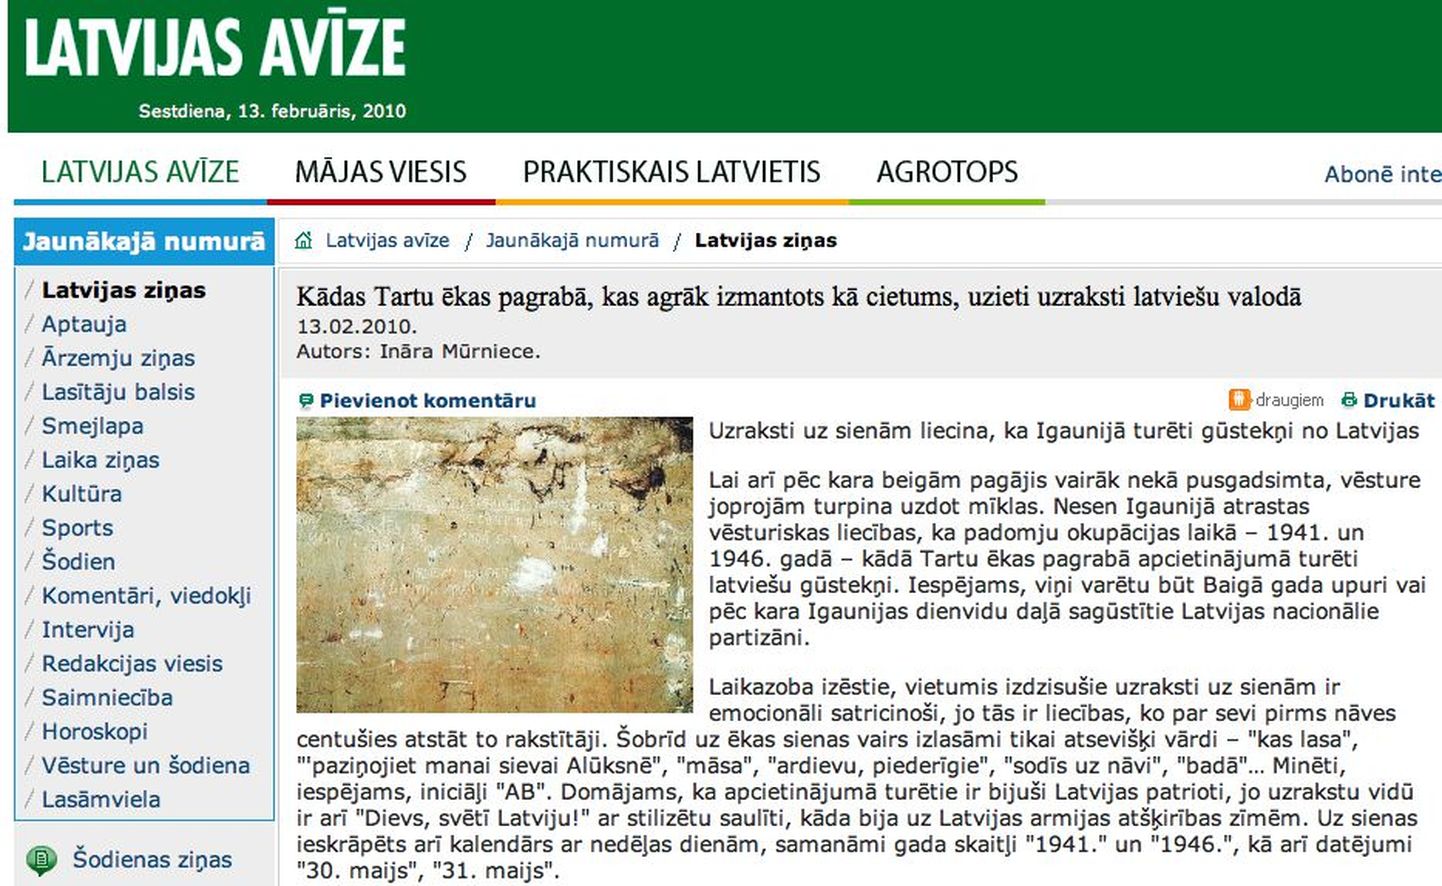 Fragment Läti ajalehe Latvijas Avize kodulehest.